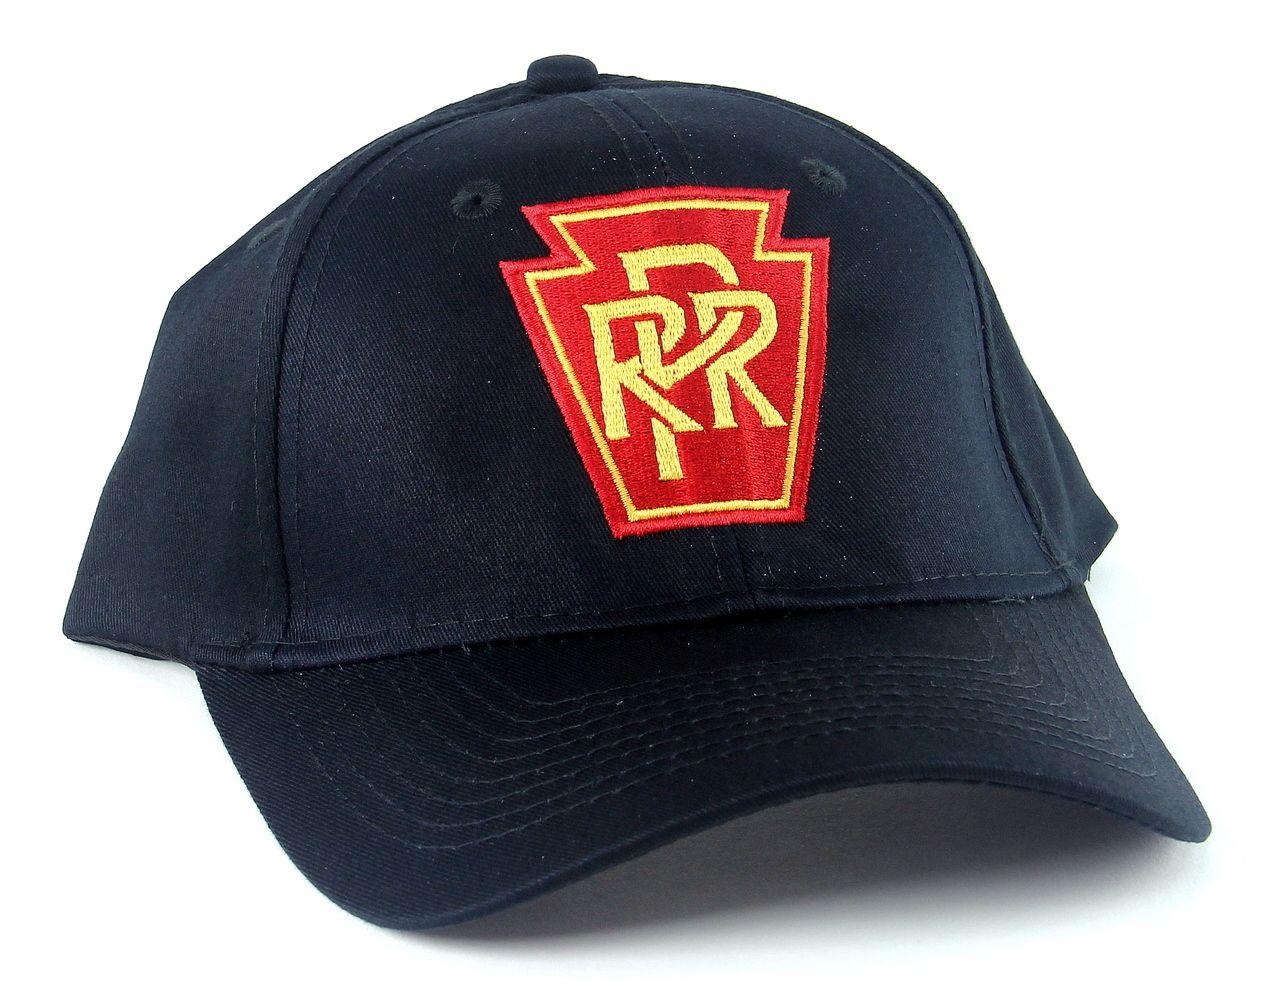 Red Keystone Logo - Nissin Black Embroidered Adjustable Hat, Pennsylvania Railroad ...